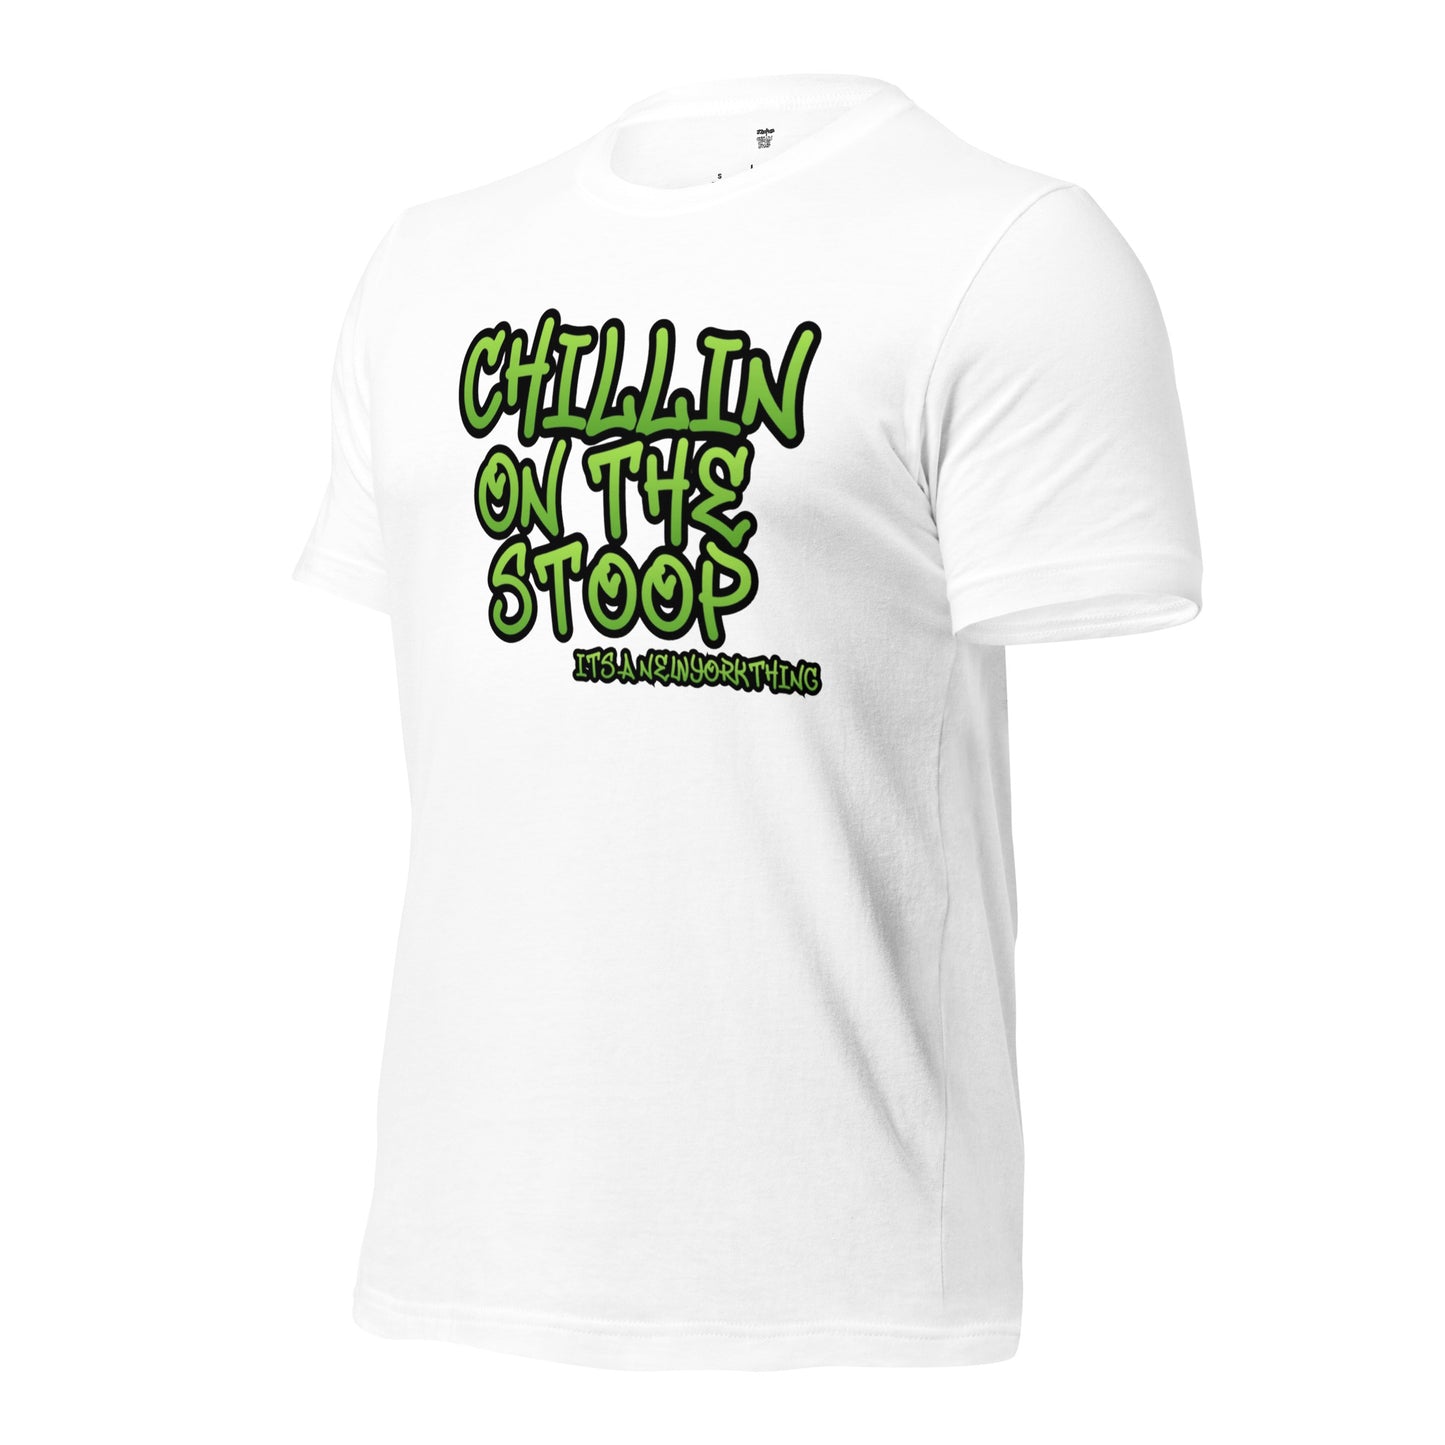 CHILLON ON THE STOOP Unisex t-shirt